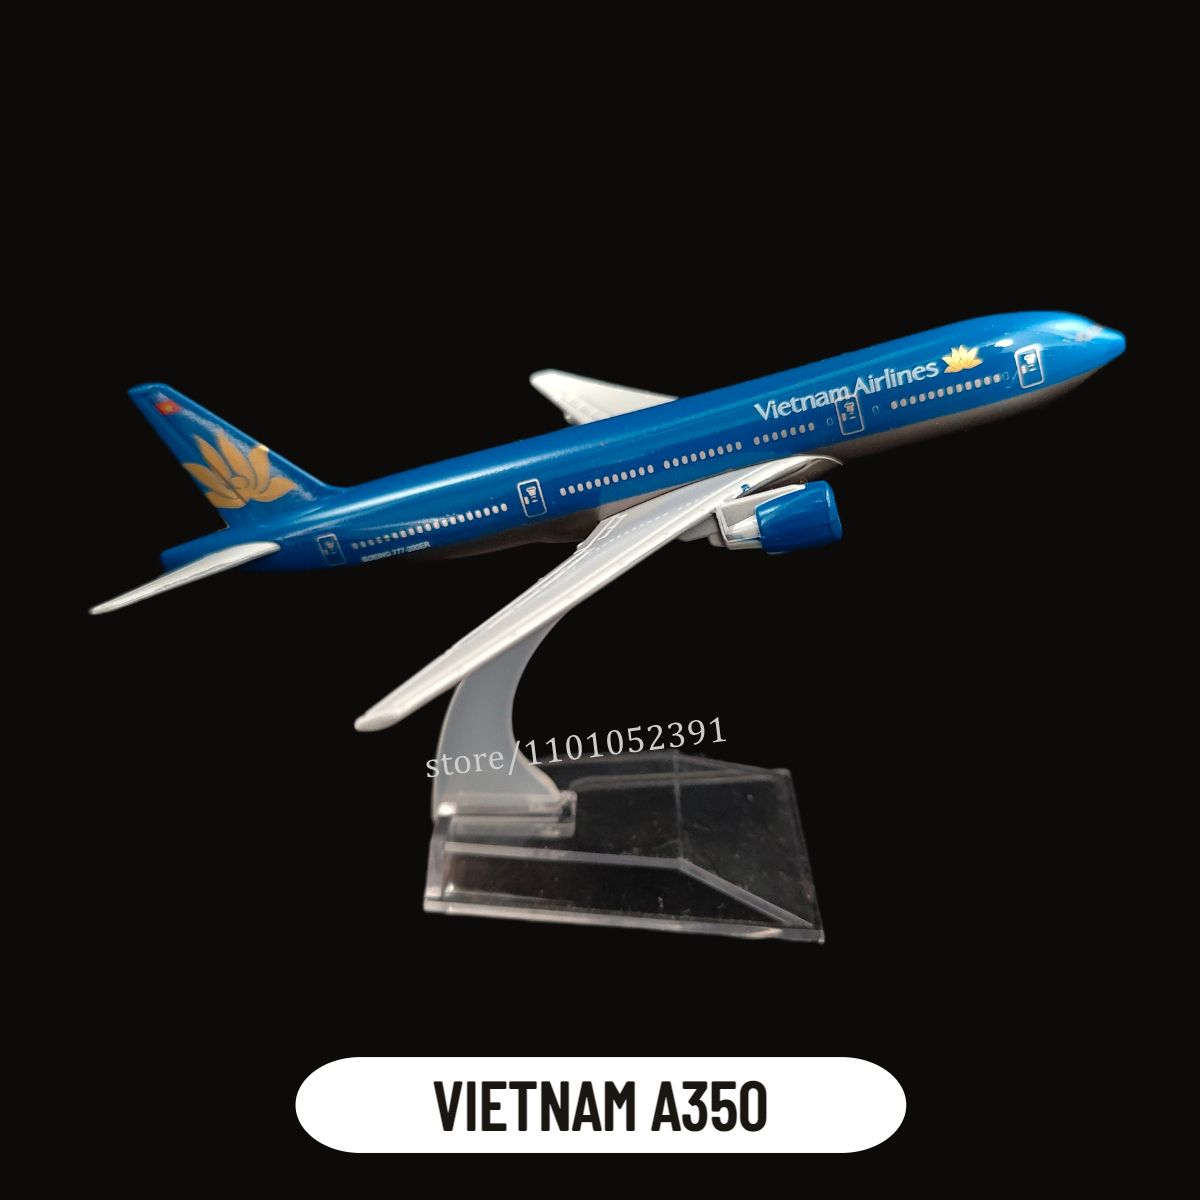 28. Vietnam A350